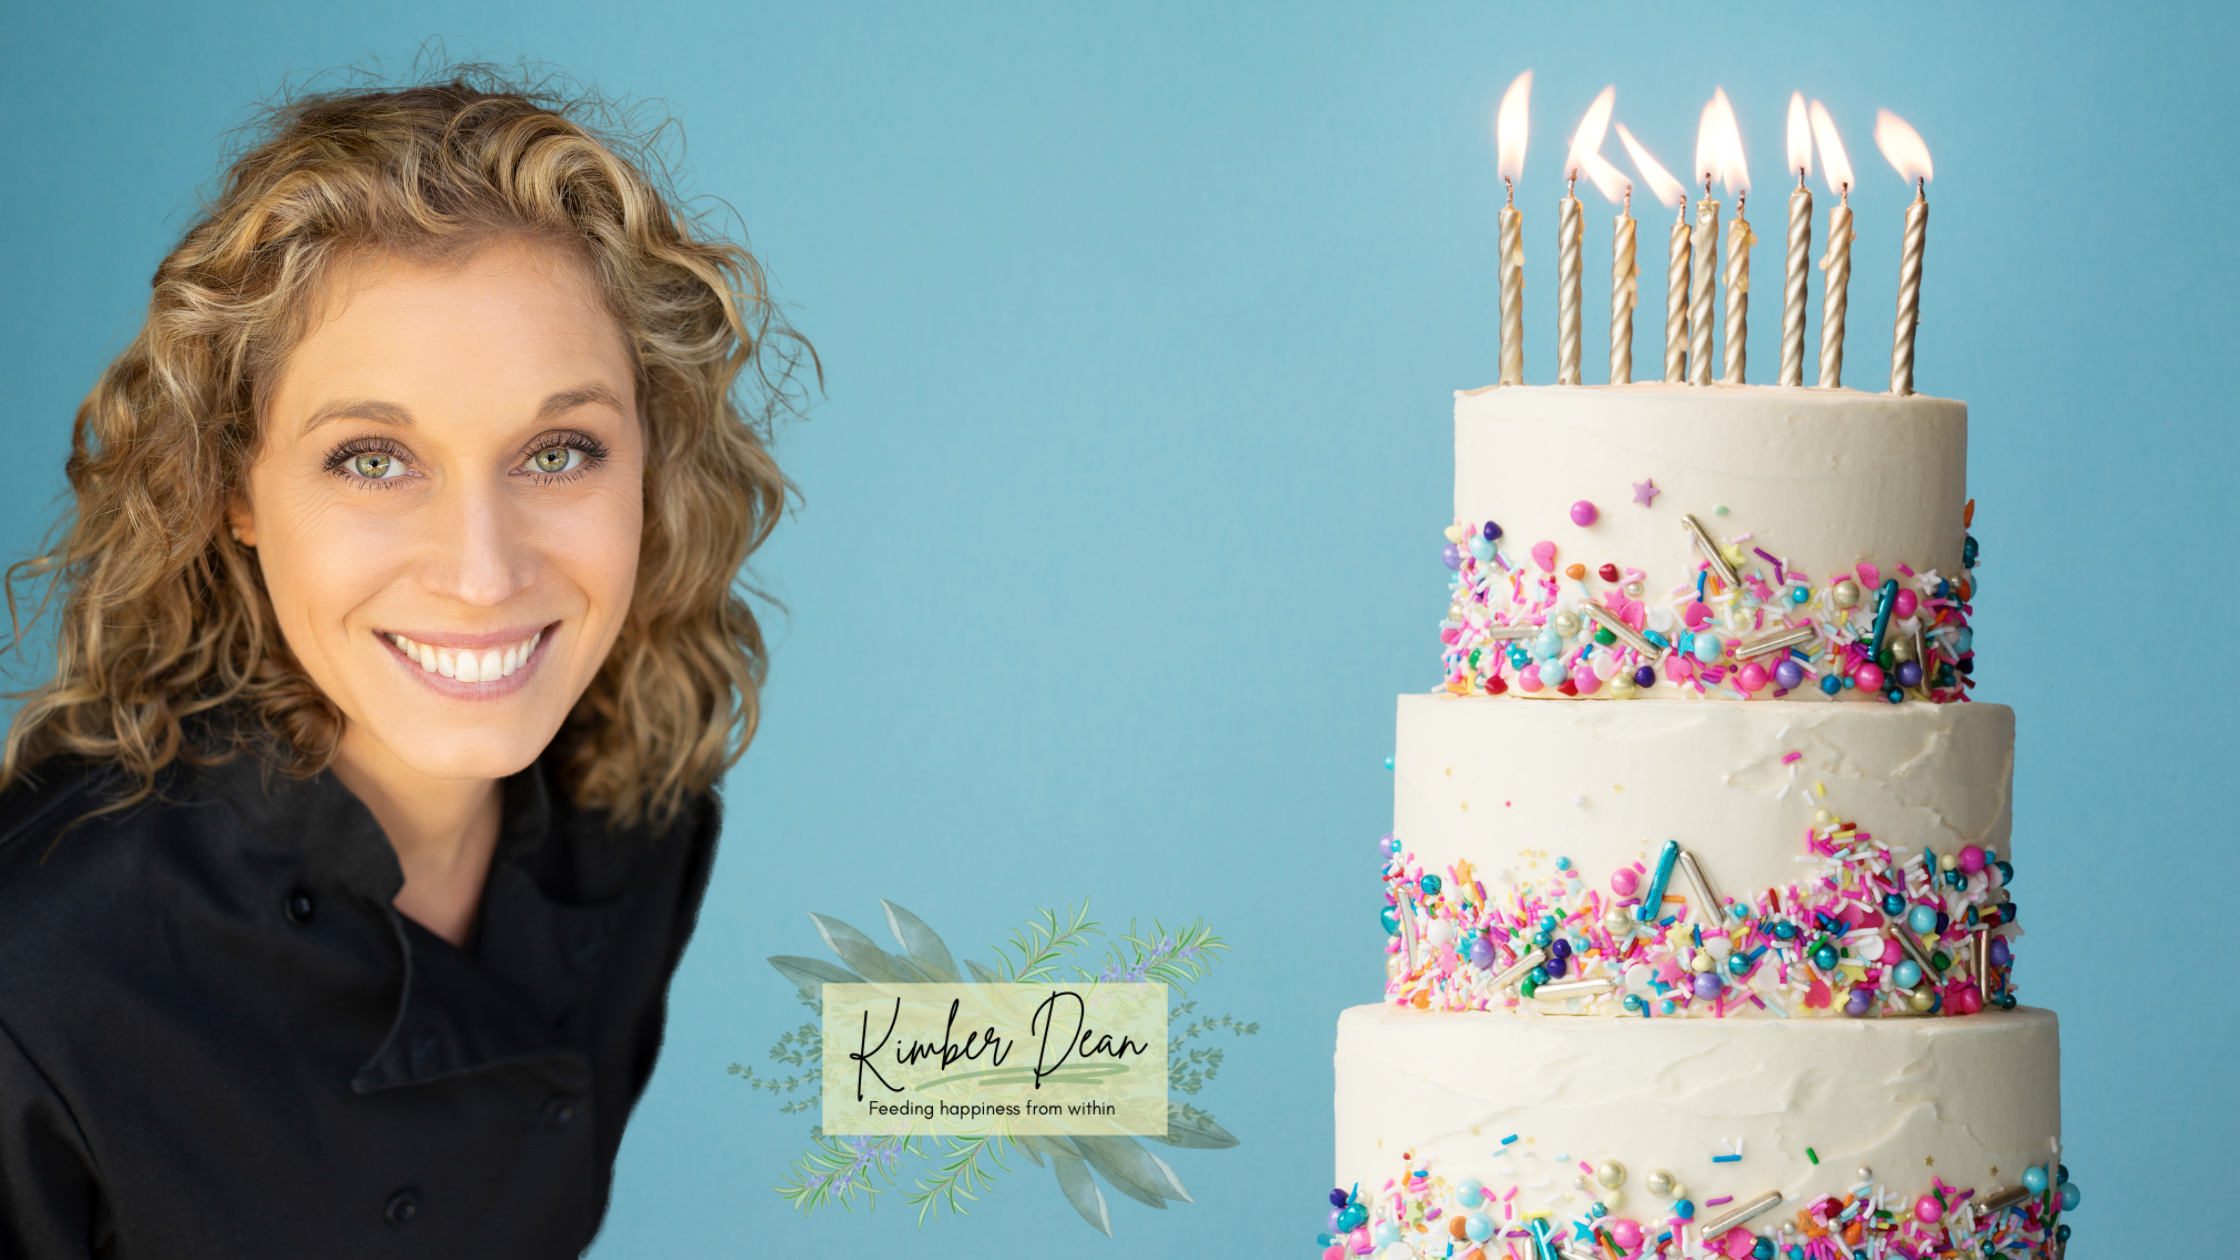 Celebrating Chef Kimber Dean: A Heartwarming Birthday Experience